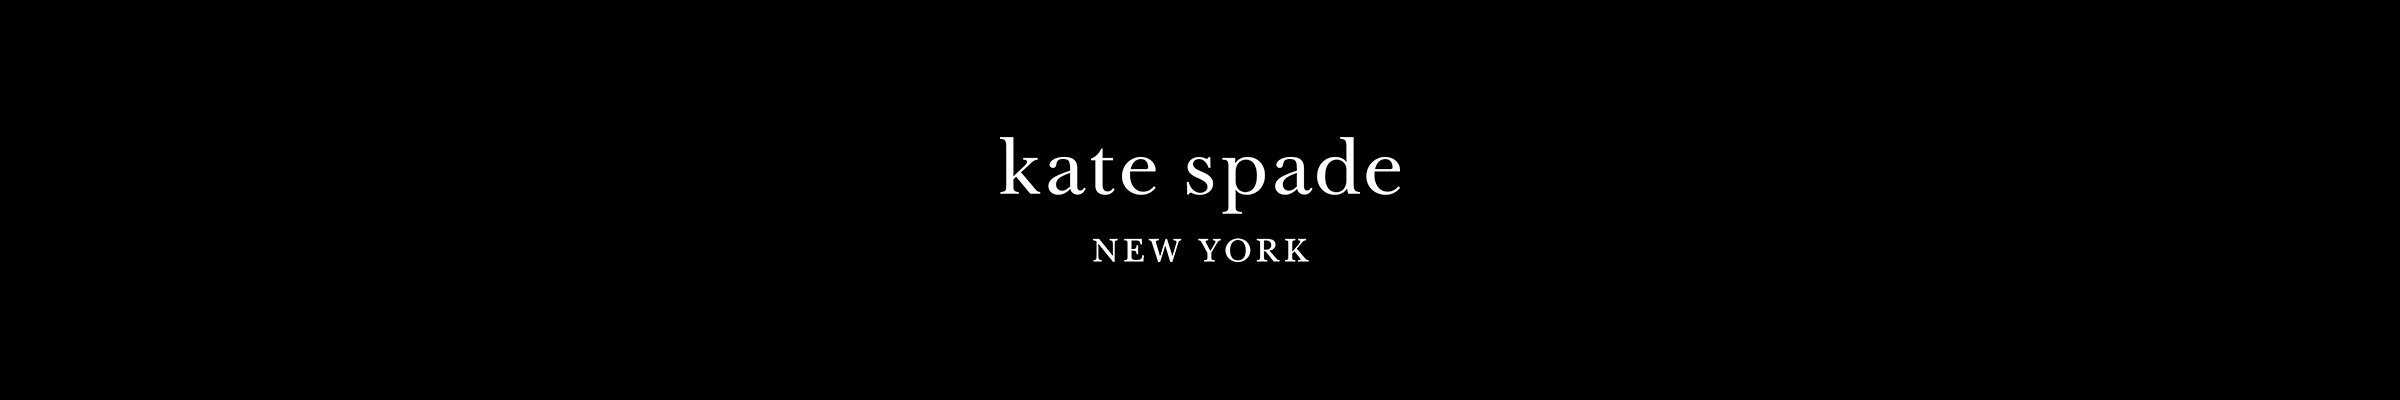 kate-spade-banner